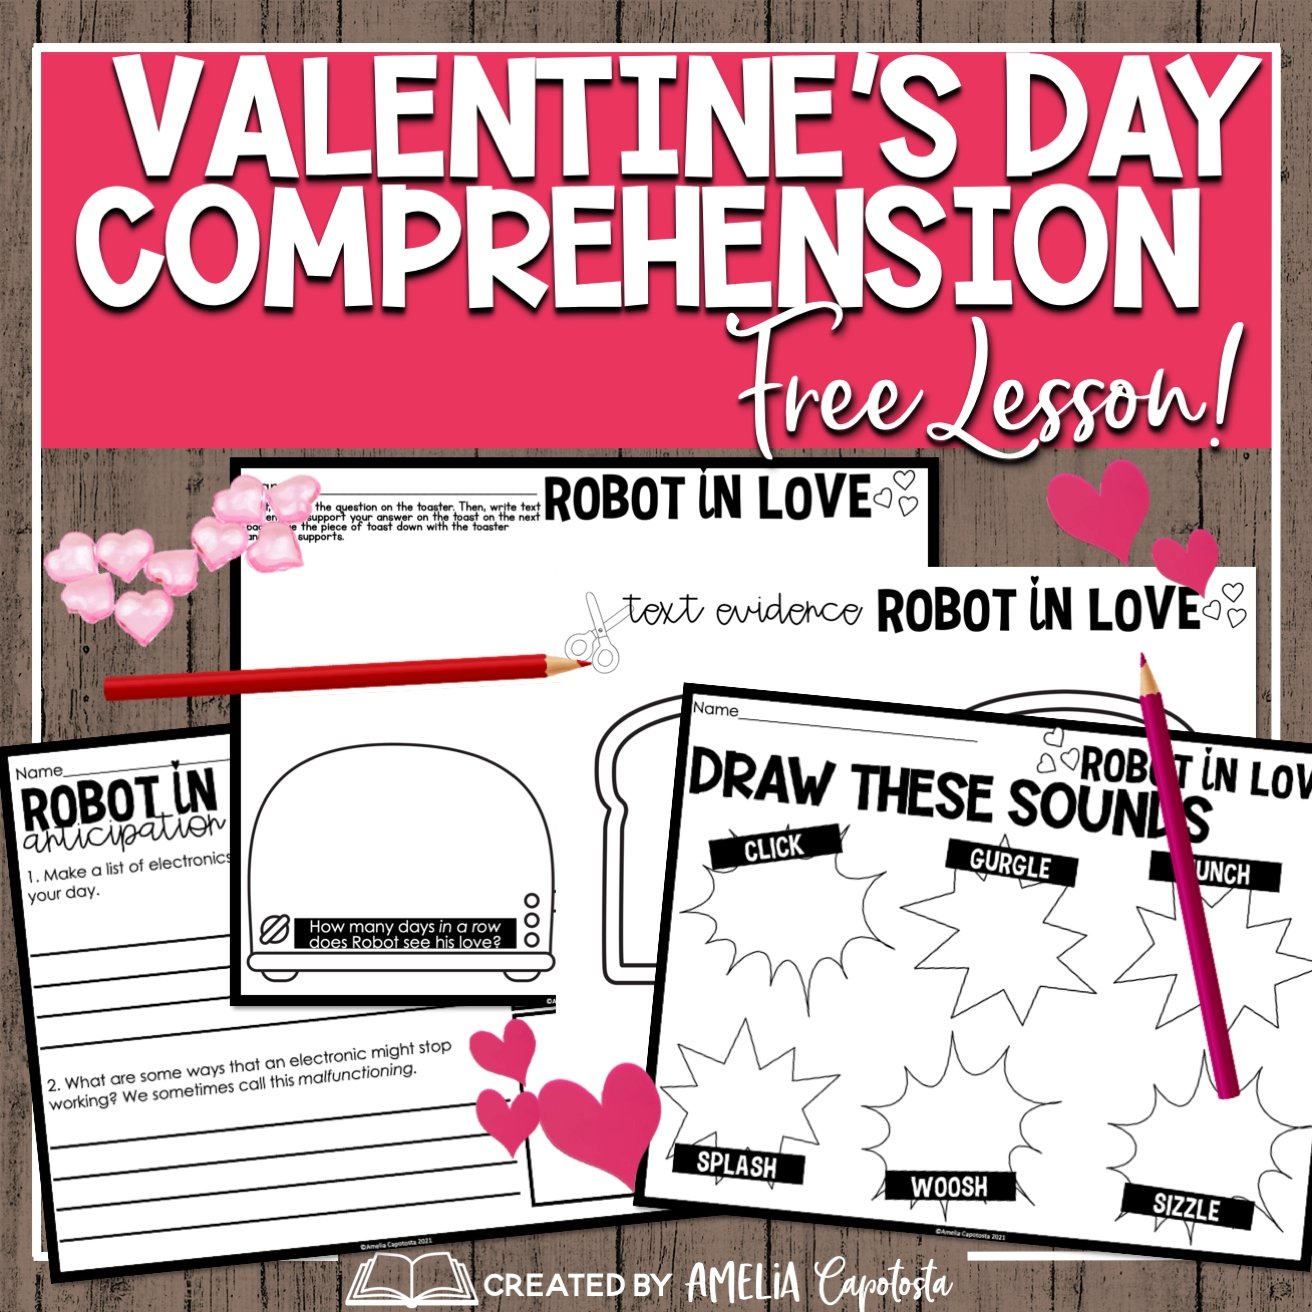 Valentine's Day FREE Comprehension Lesson